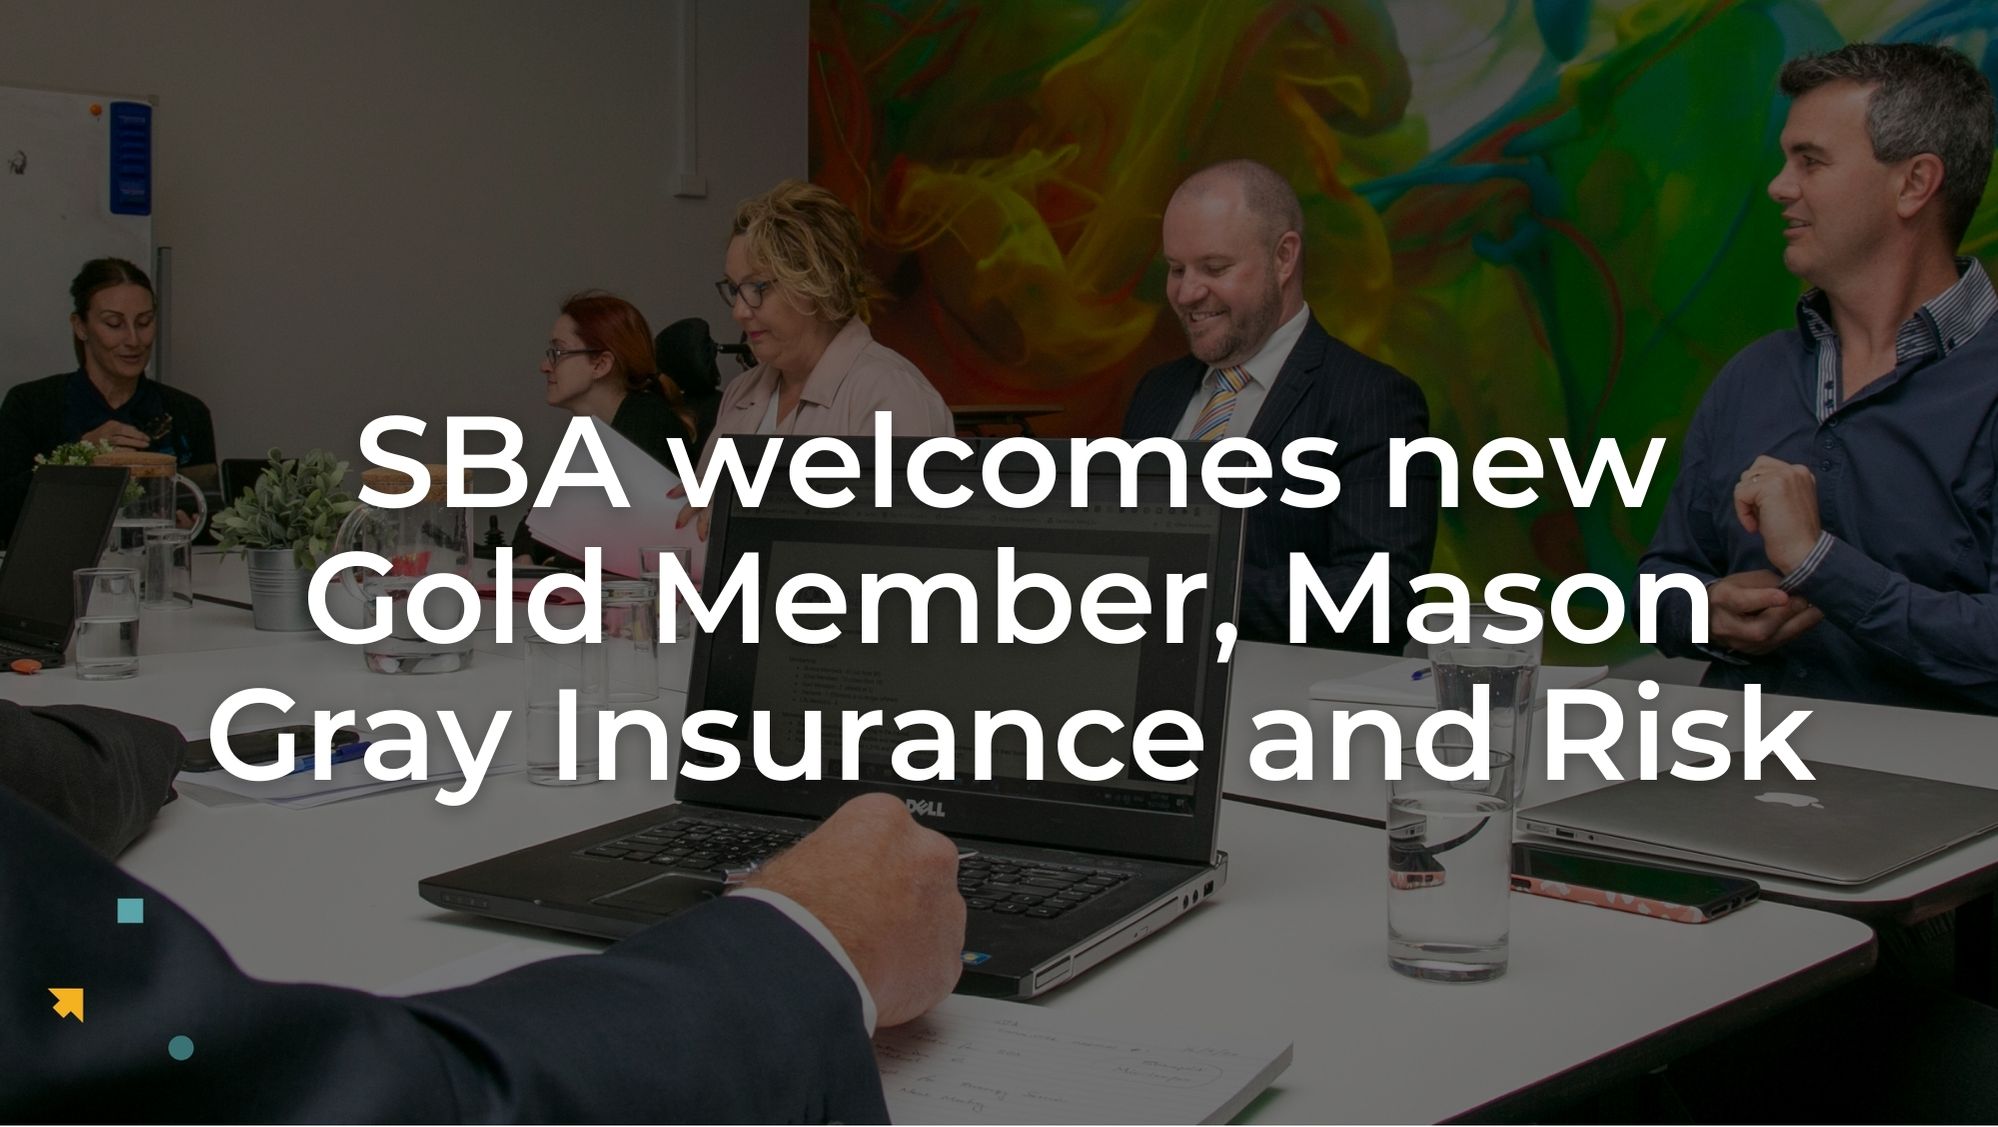 SBA welcomes new Gold Member, Mason Gray Insurance and Risk